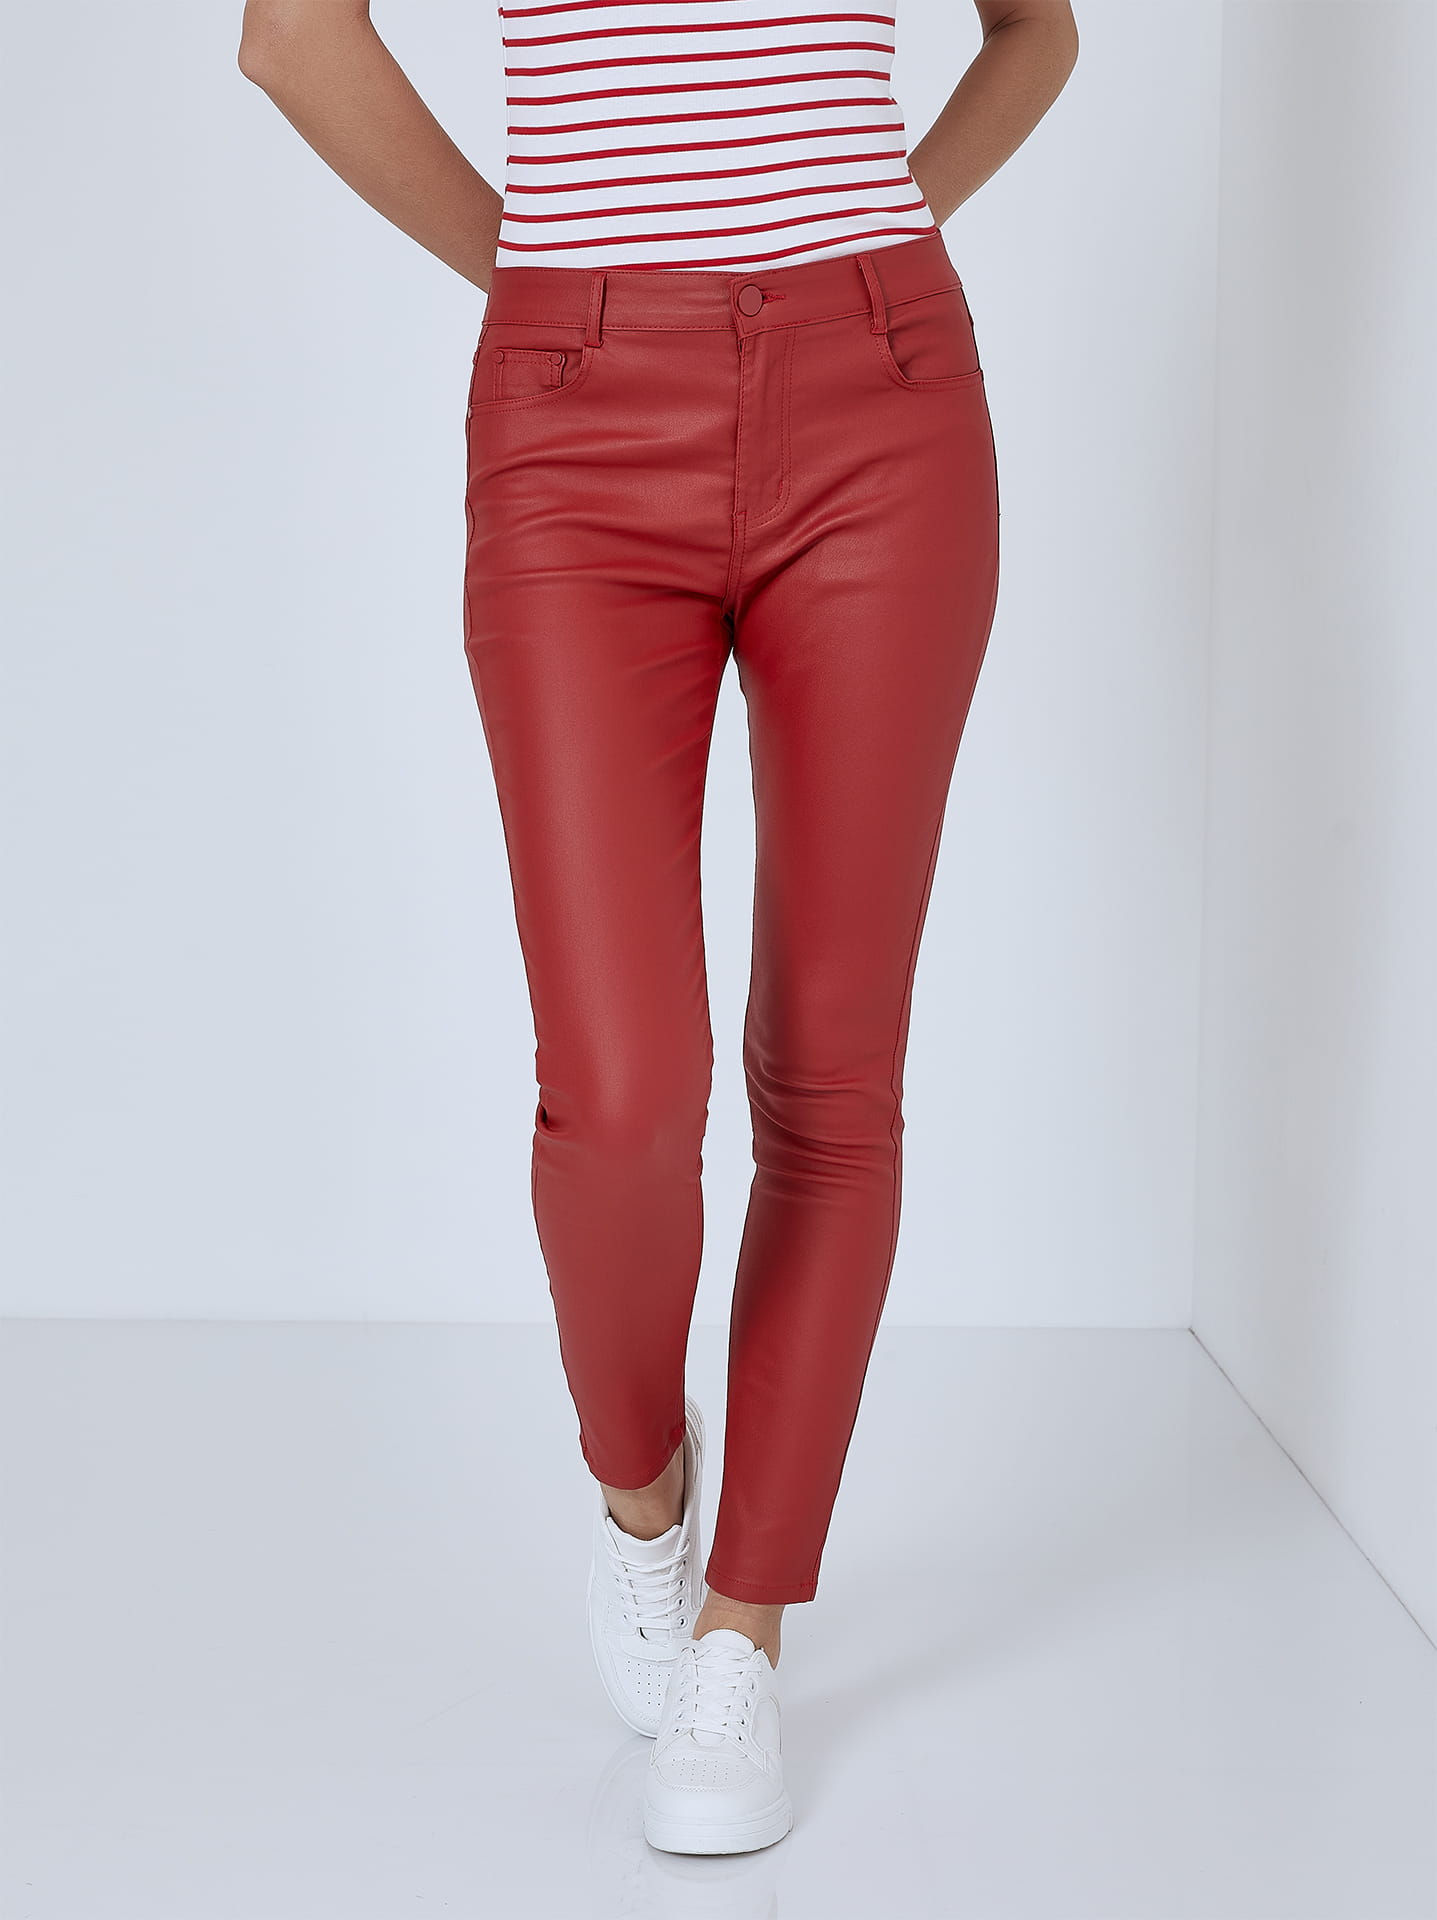 High waist leatjer effect trousers curvy in dark red, 26.99 ...